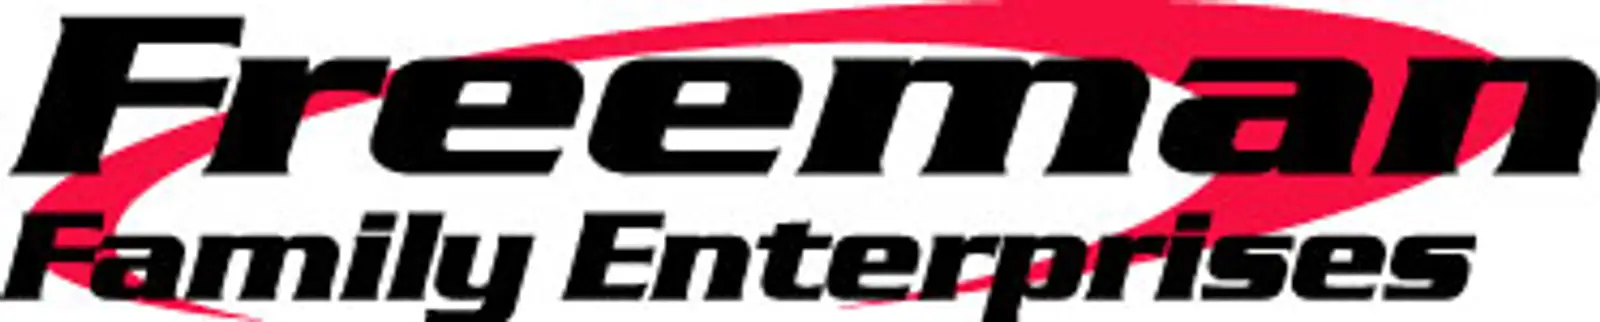 Freeman Family Enterprises logo